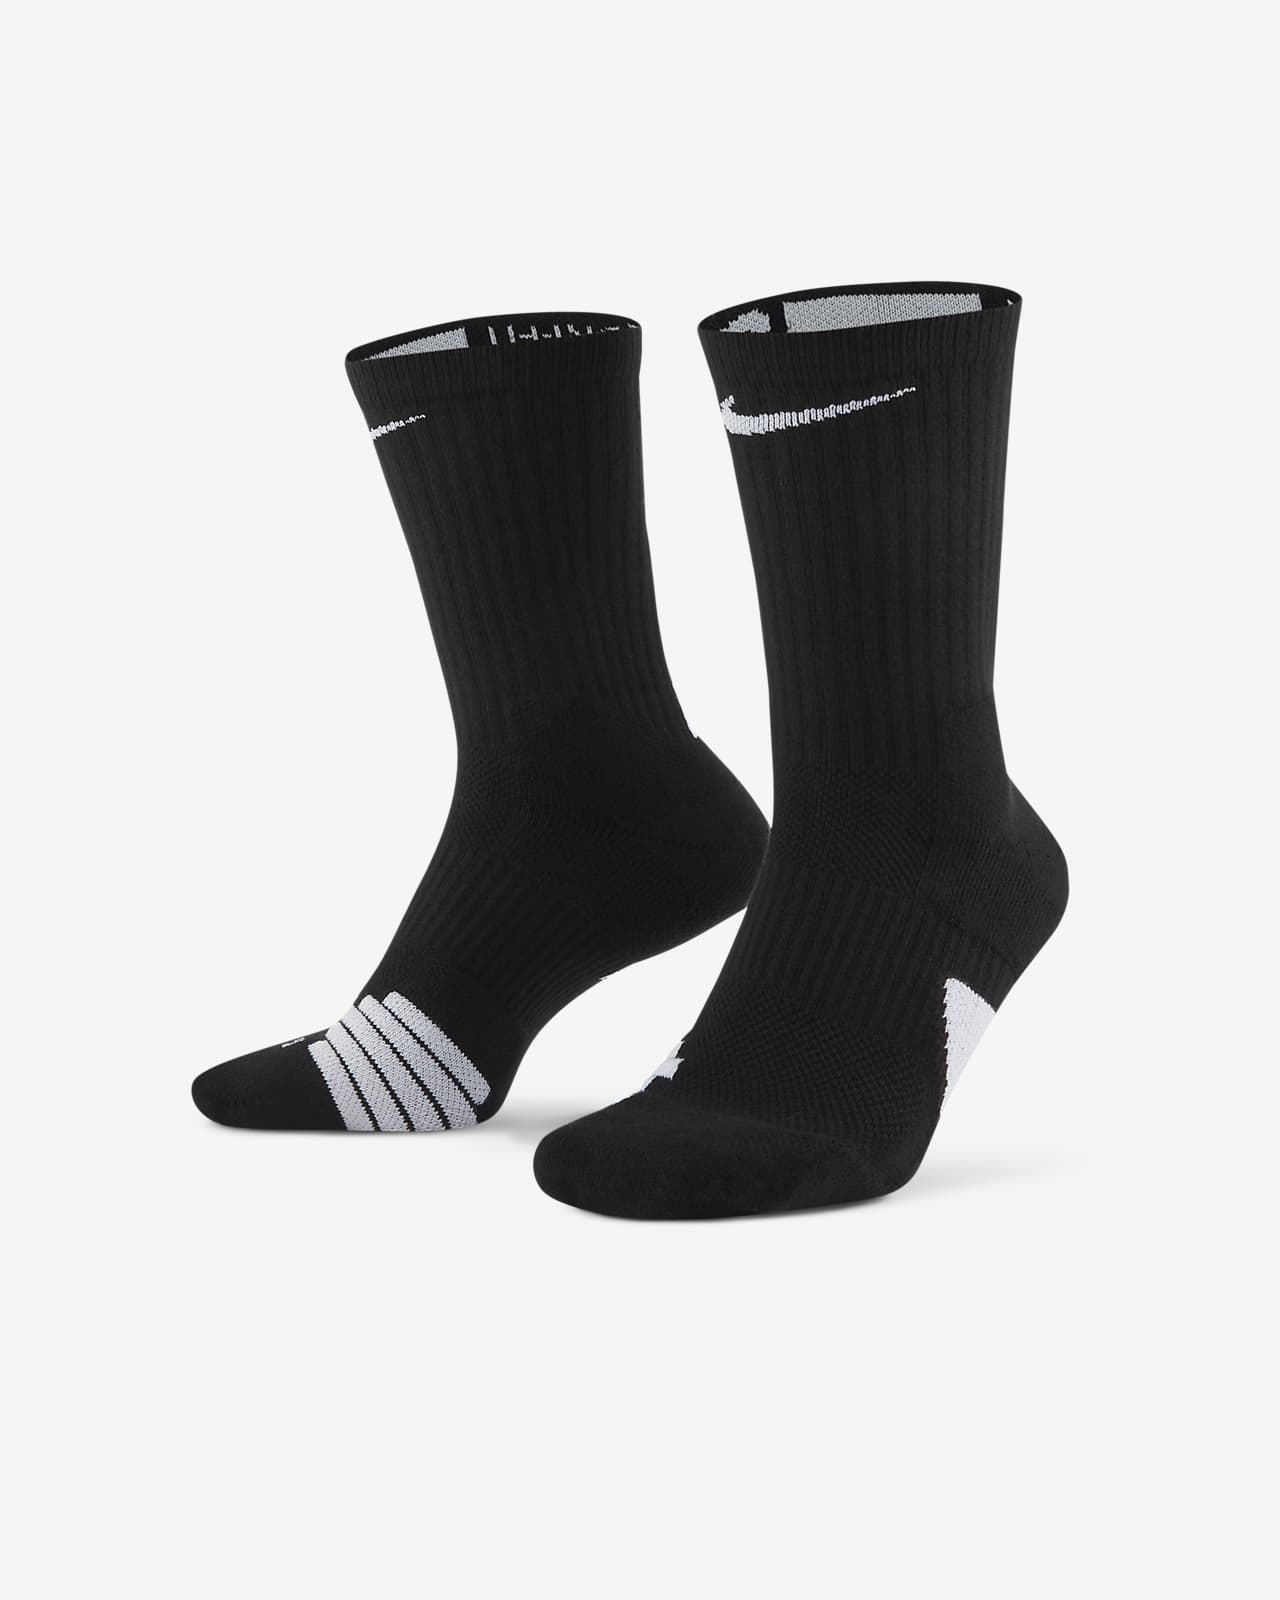 Nike NBA Power Grip socks XL  Grip socks, Elite basketball socks